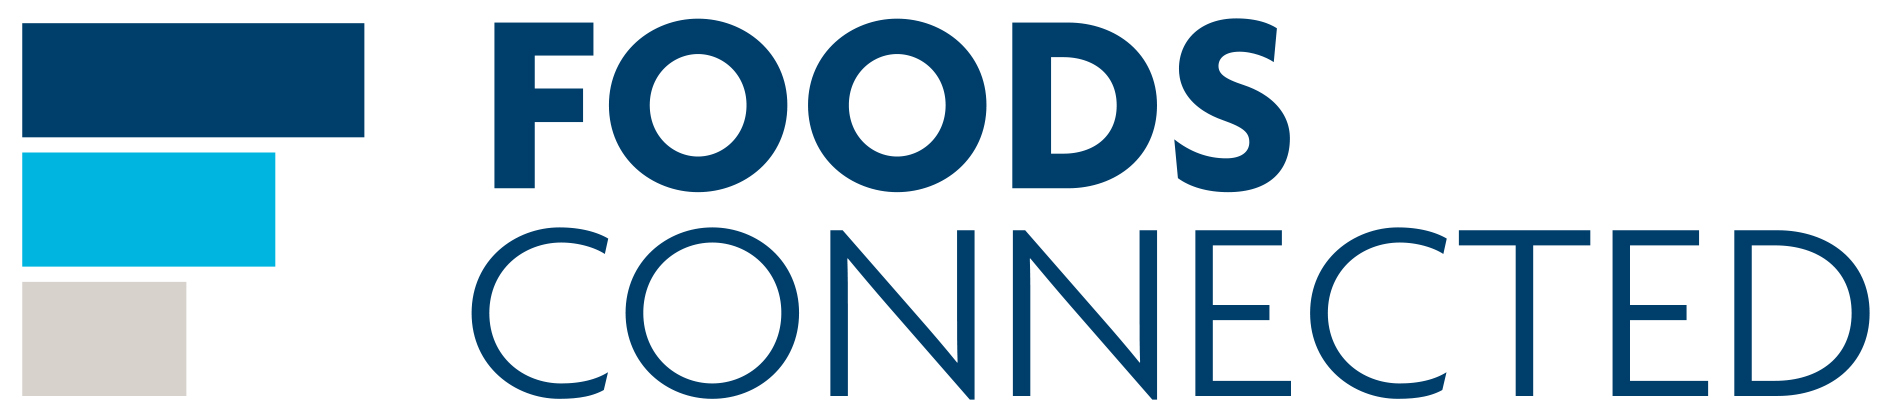 FoodsConnected logos UPDATE